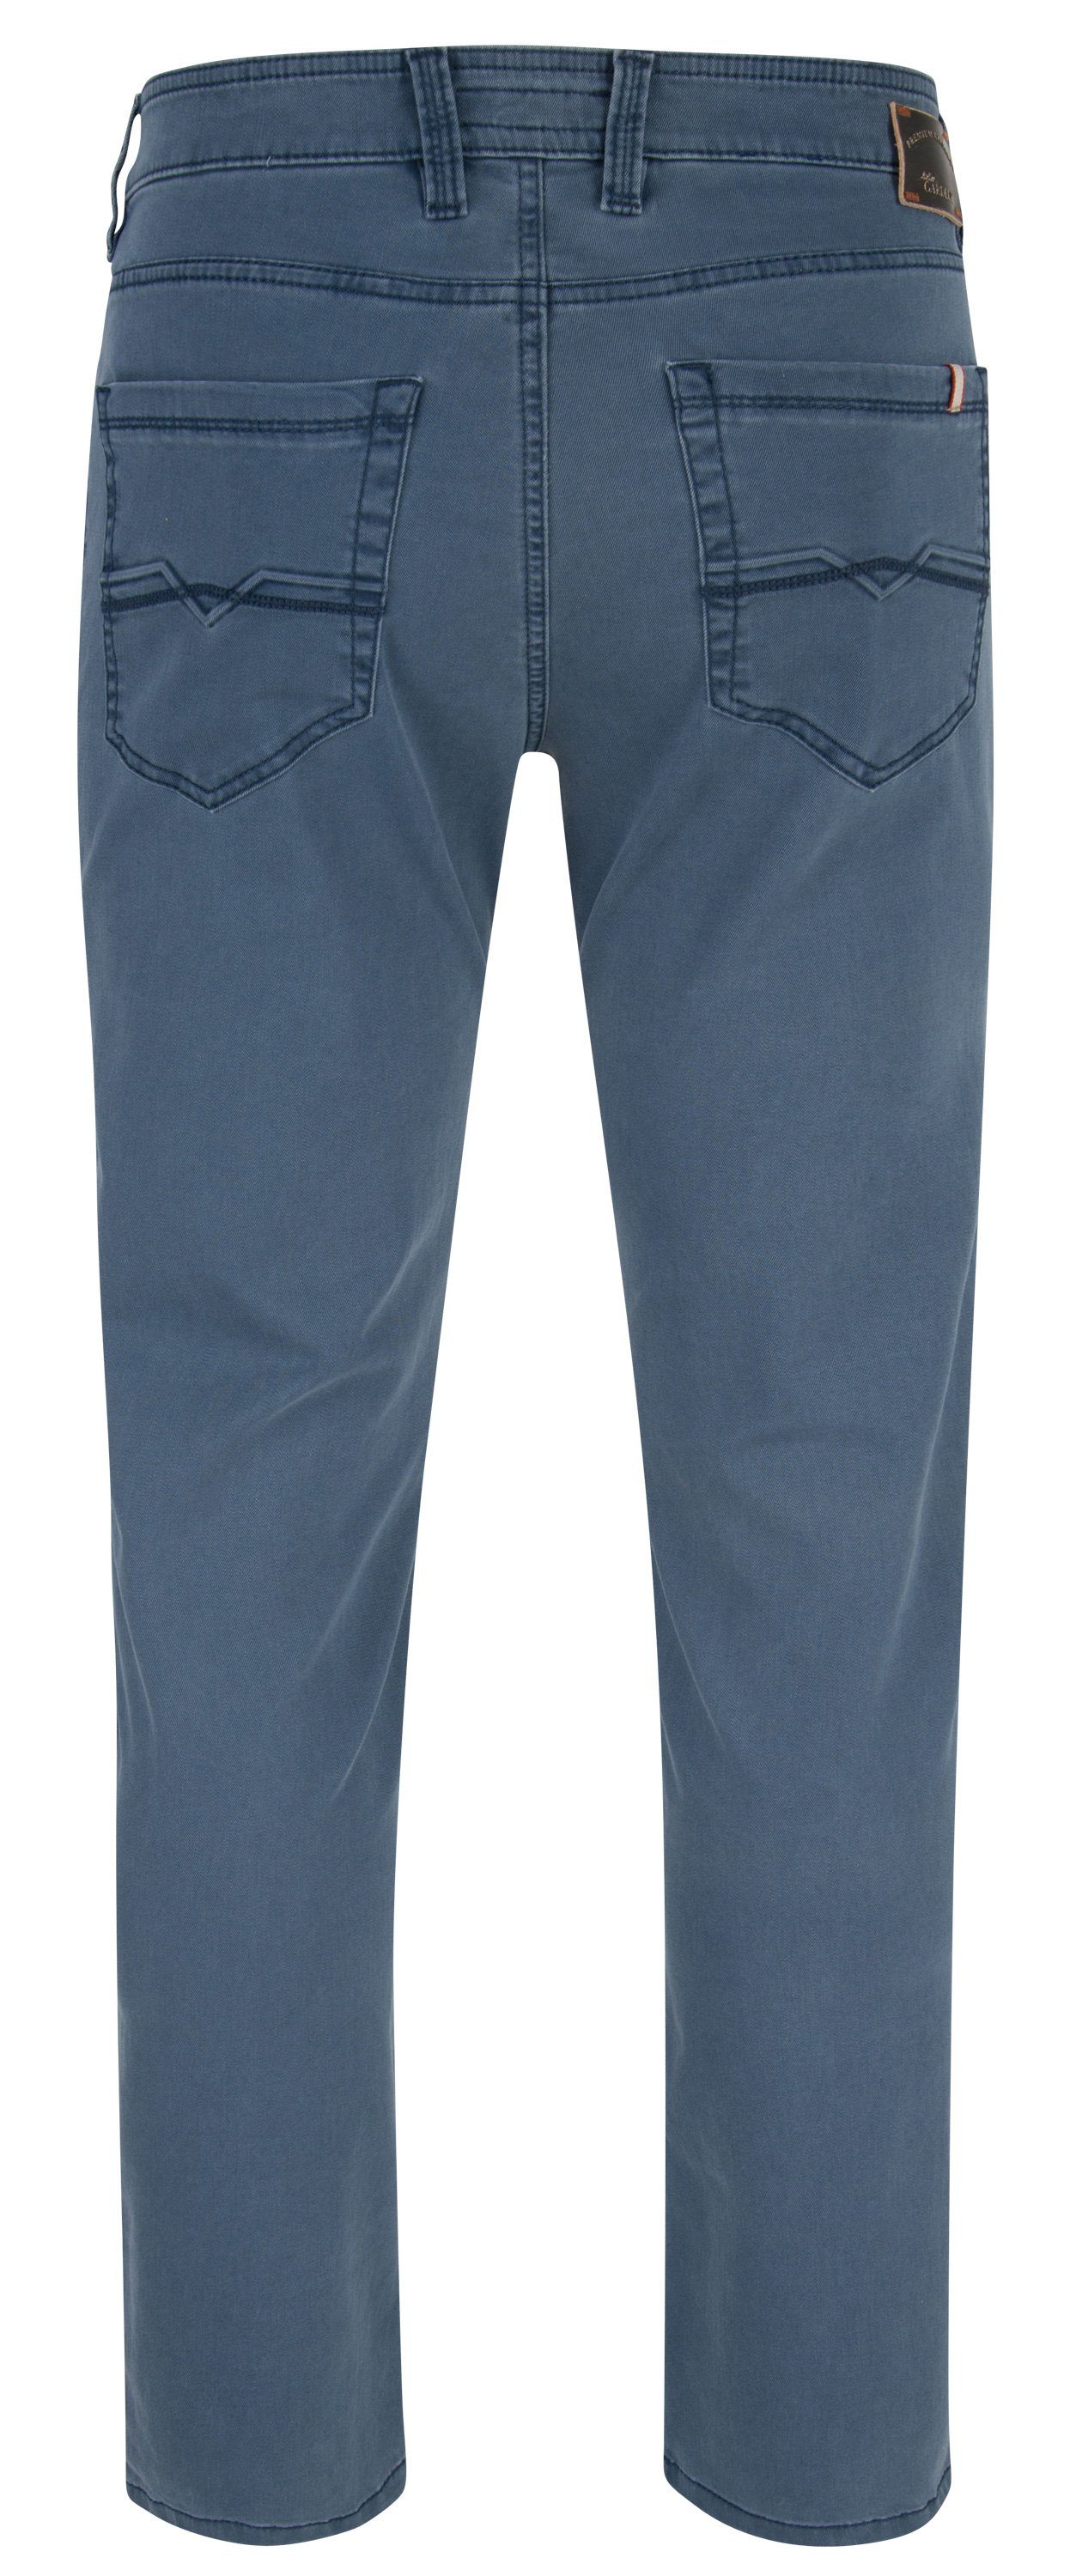 Atelier GARDEUR 5-Pocket-Jeans ATELIER GARDEUR blue dove BATU 2-0-411121-66